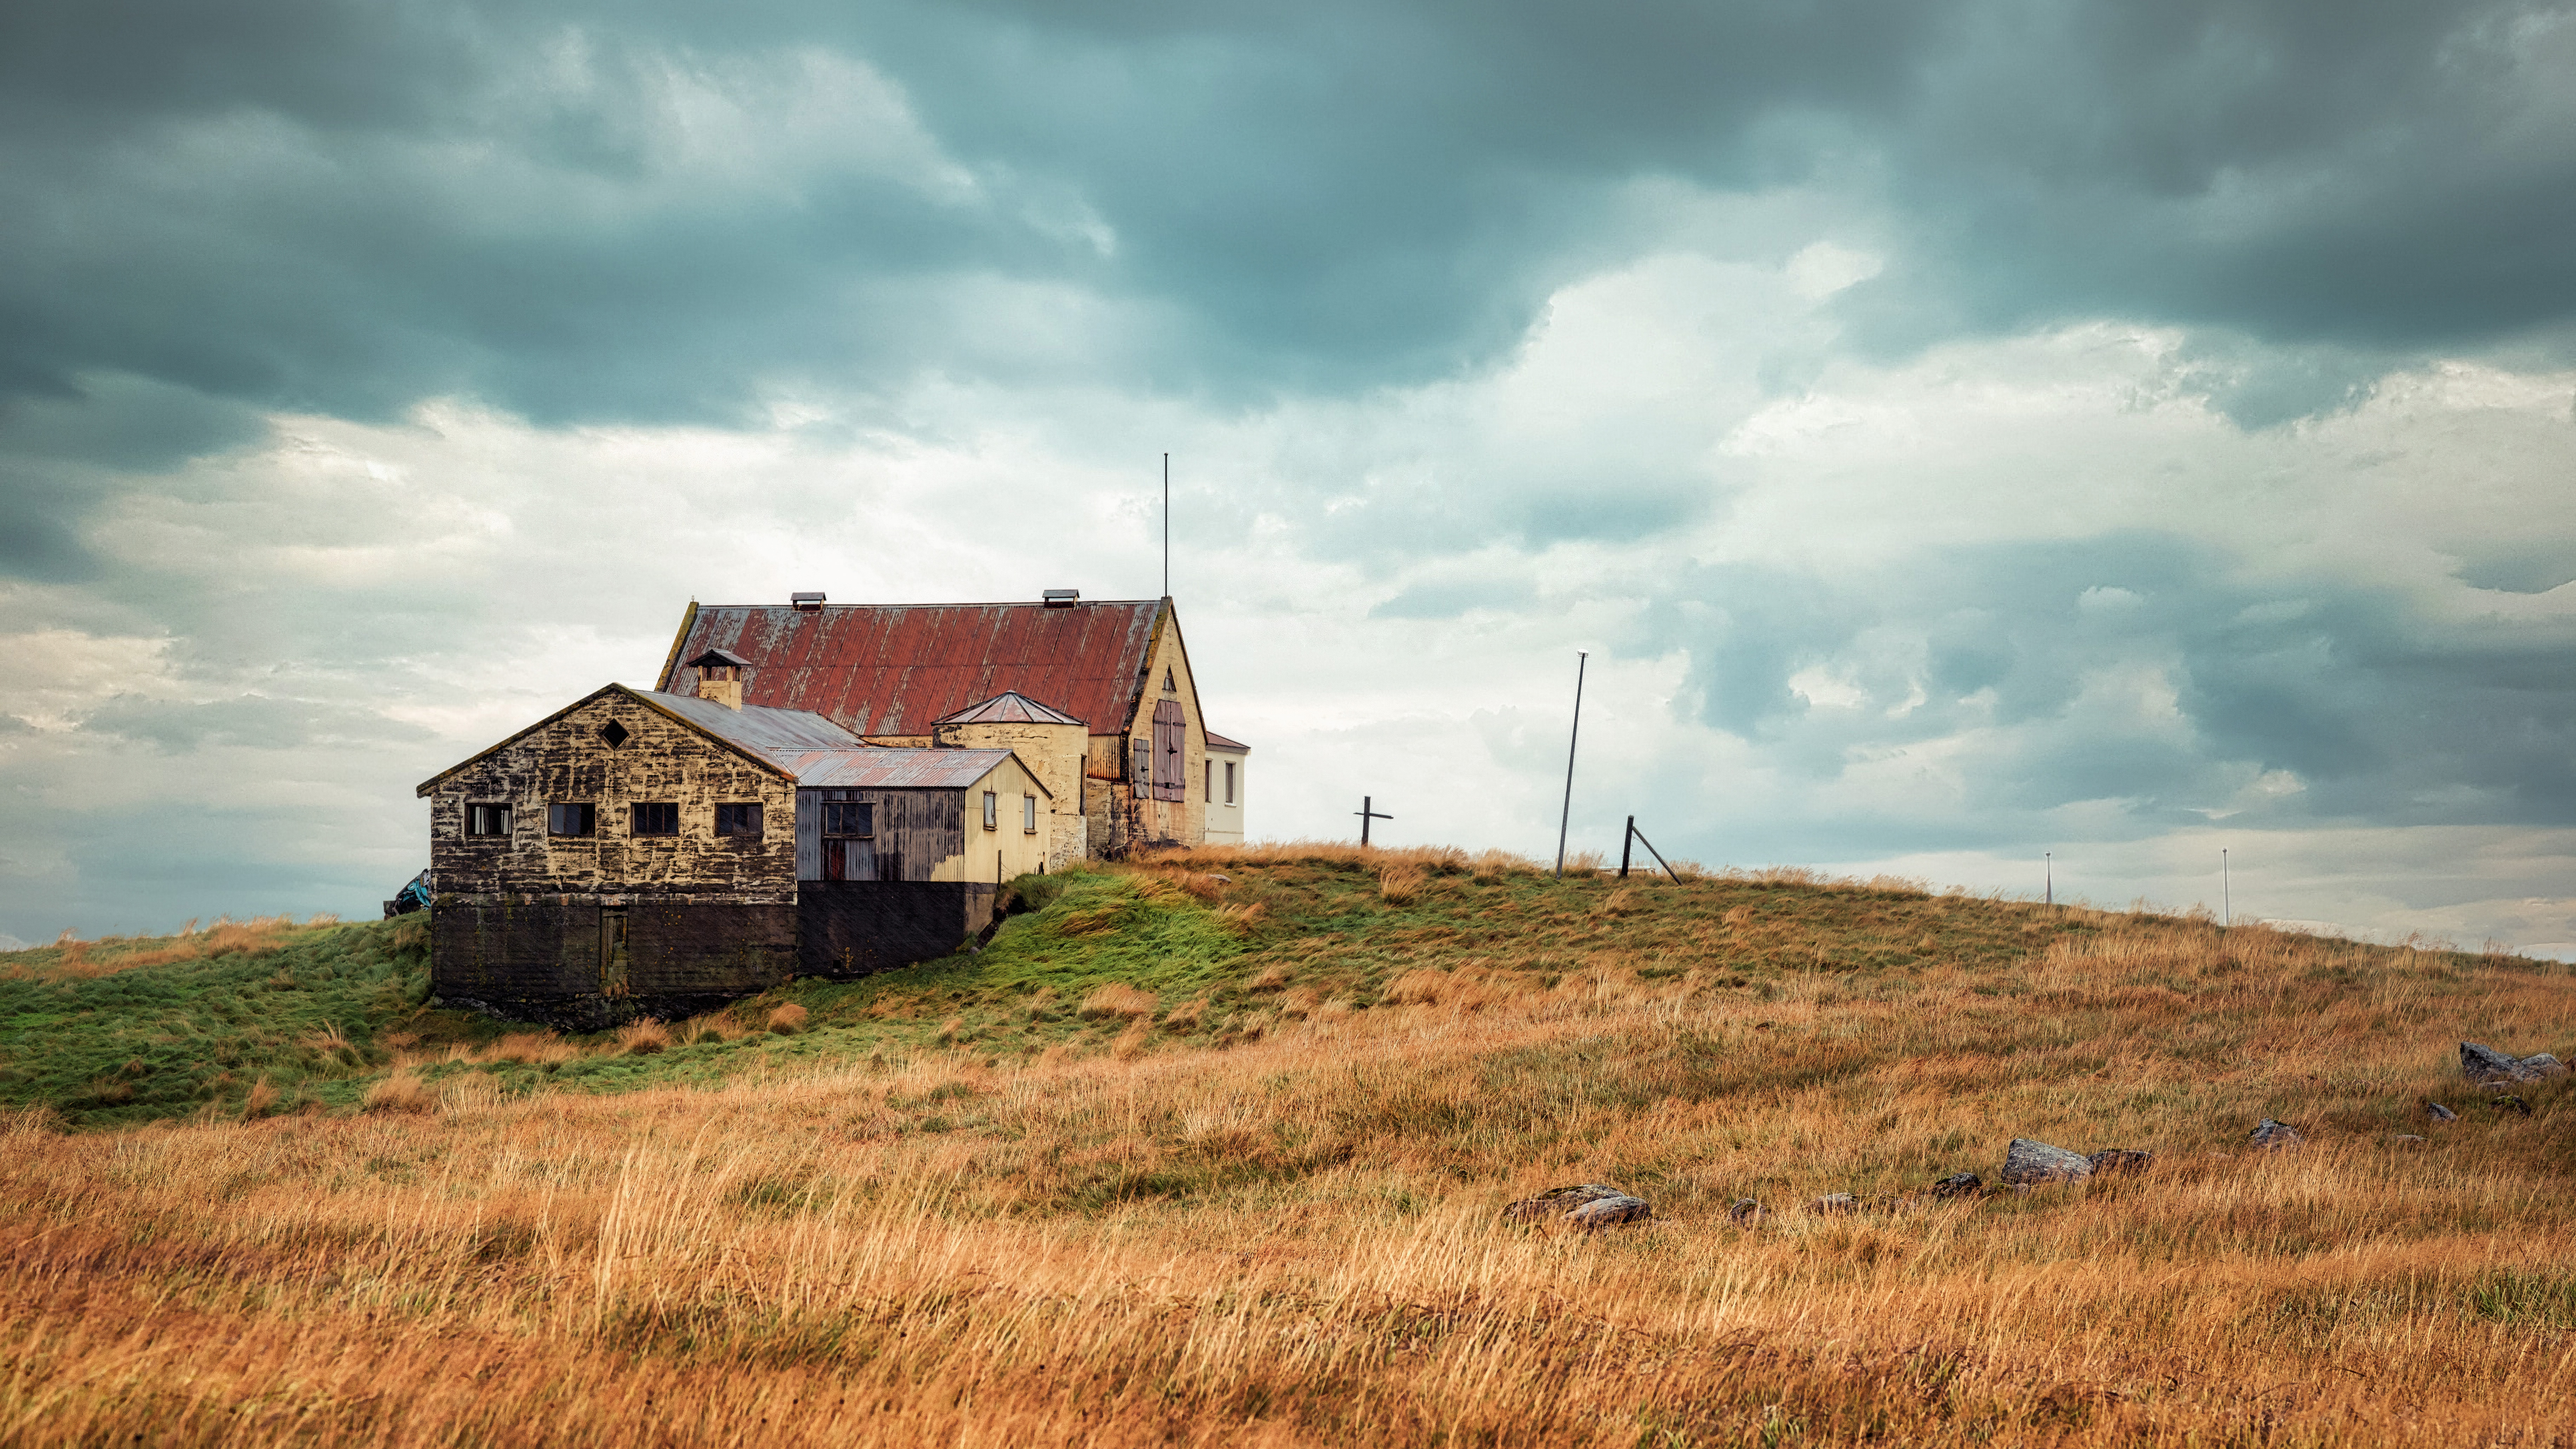 A farm house | Source: Shutterstock